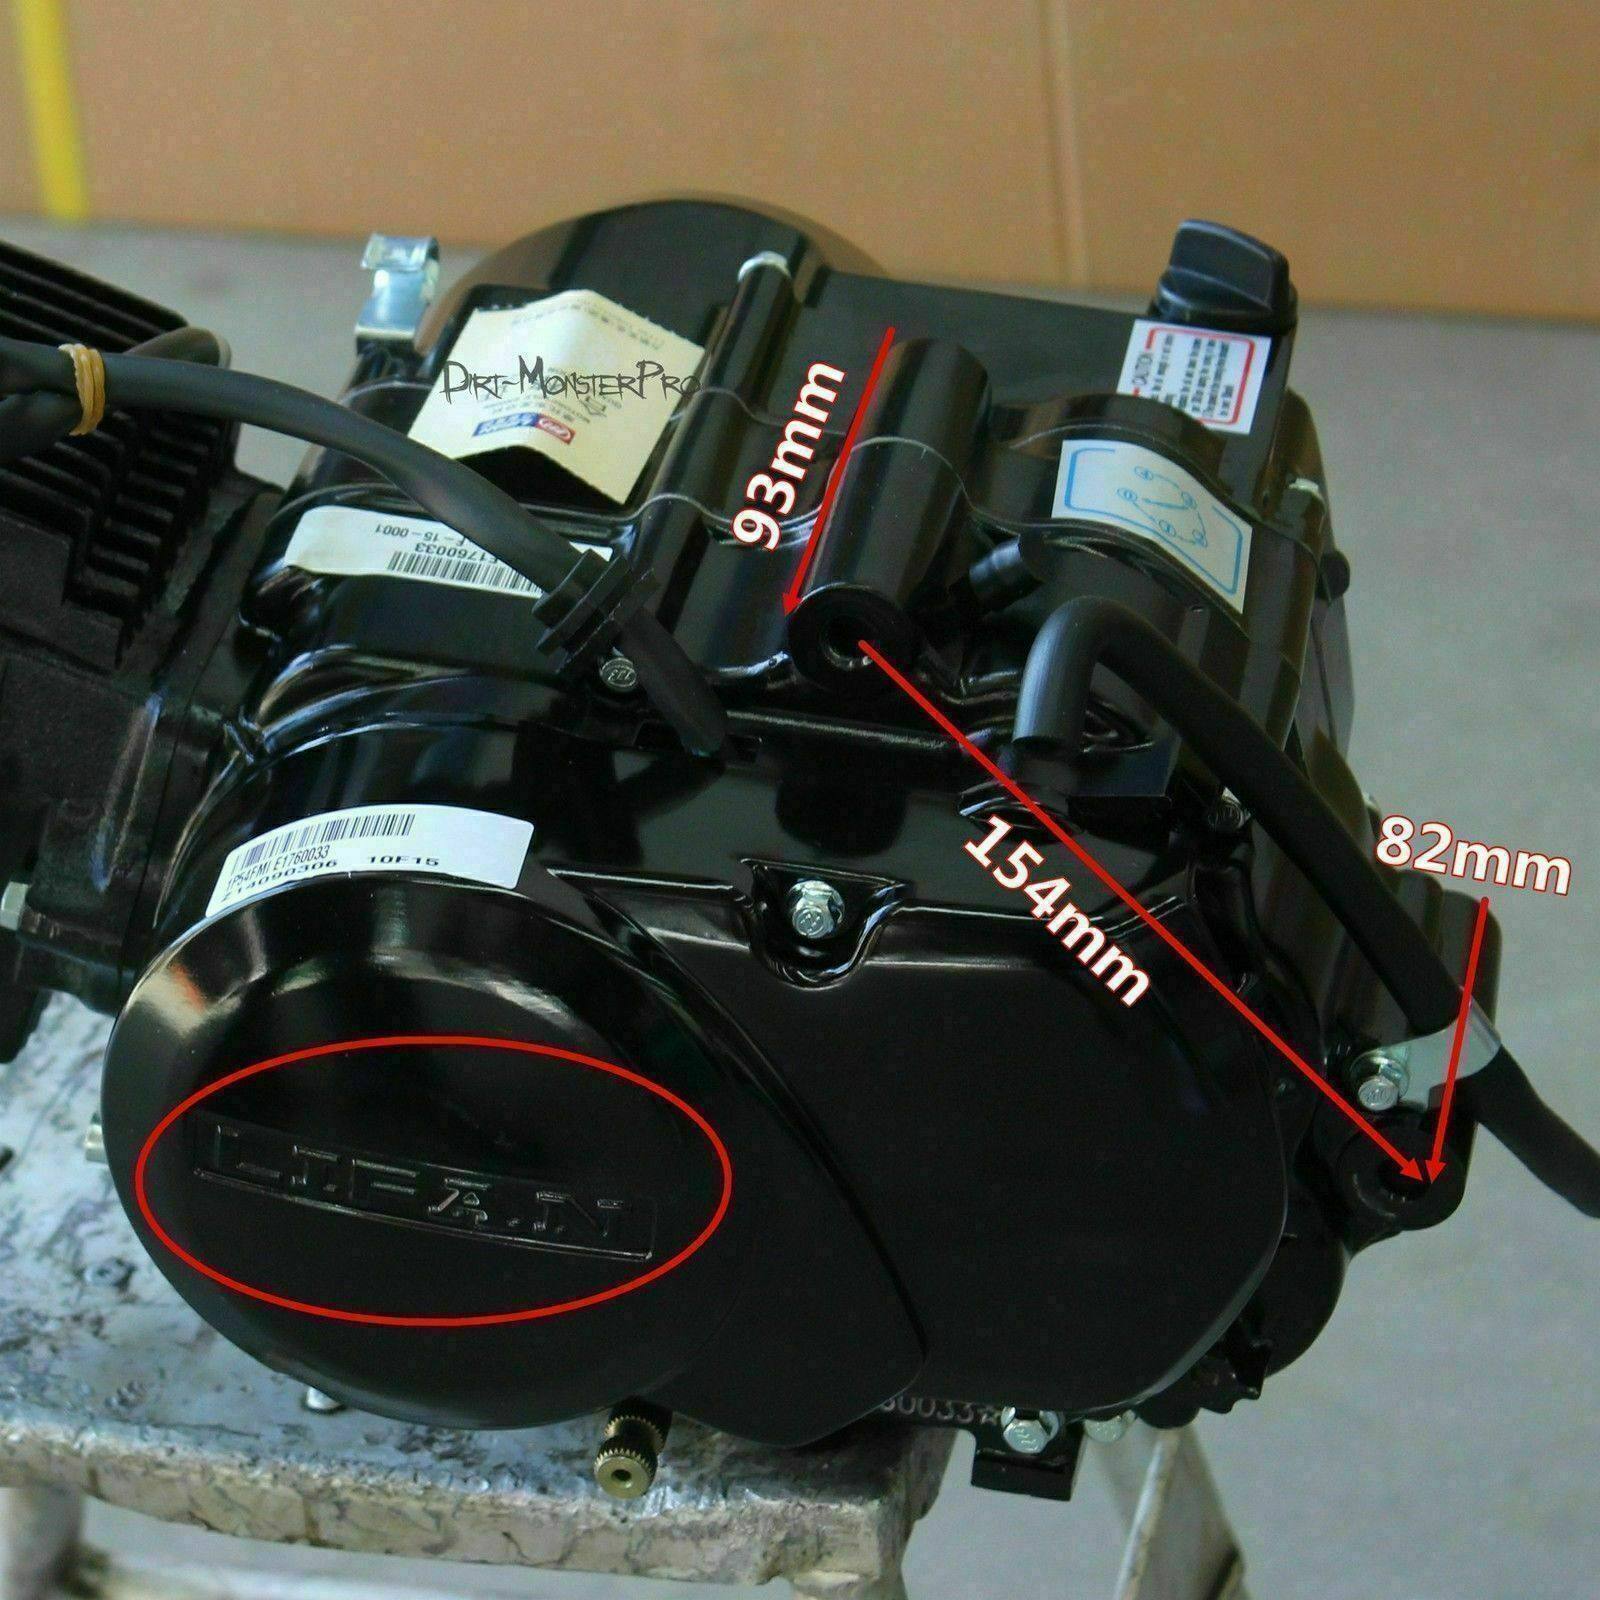 Lifan 125cc 1 Down 3 Up Gear Manual Clutch Engine Motor For Off Road Dirt Bike Motorbike - TDRMOTO